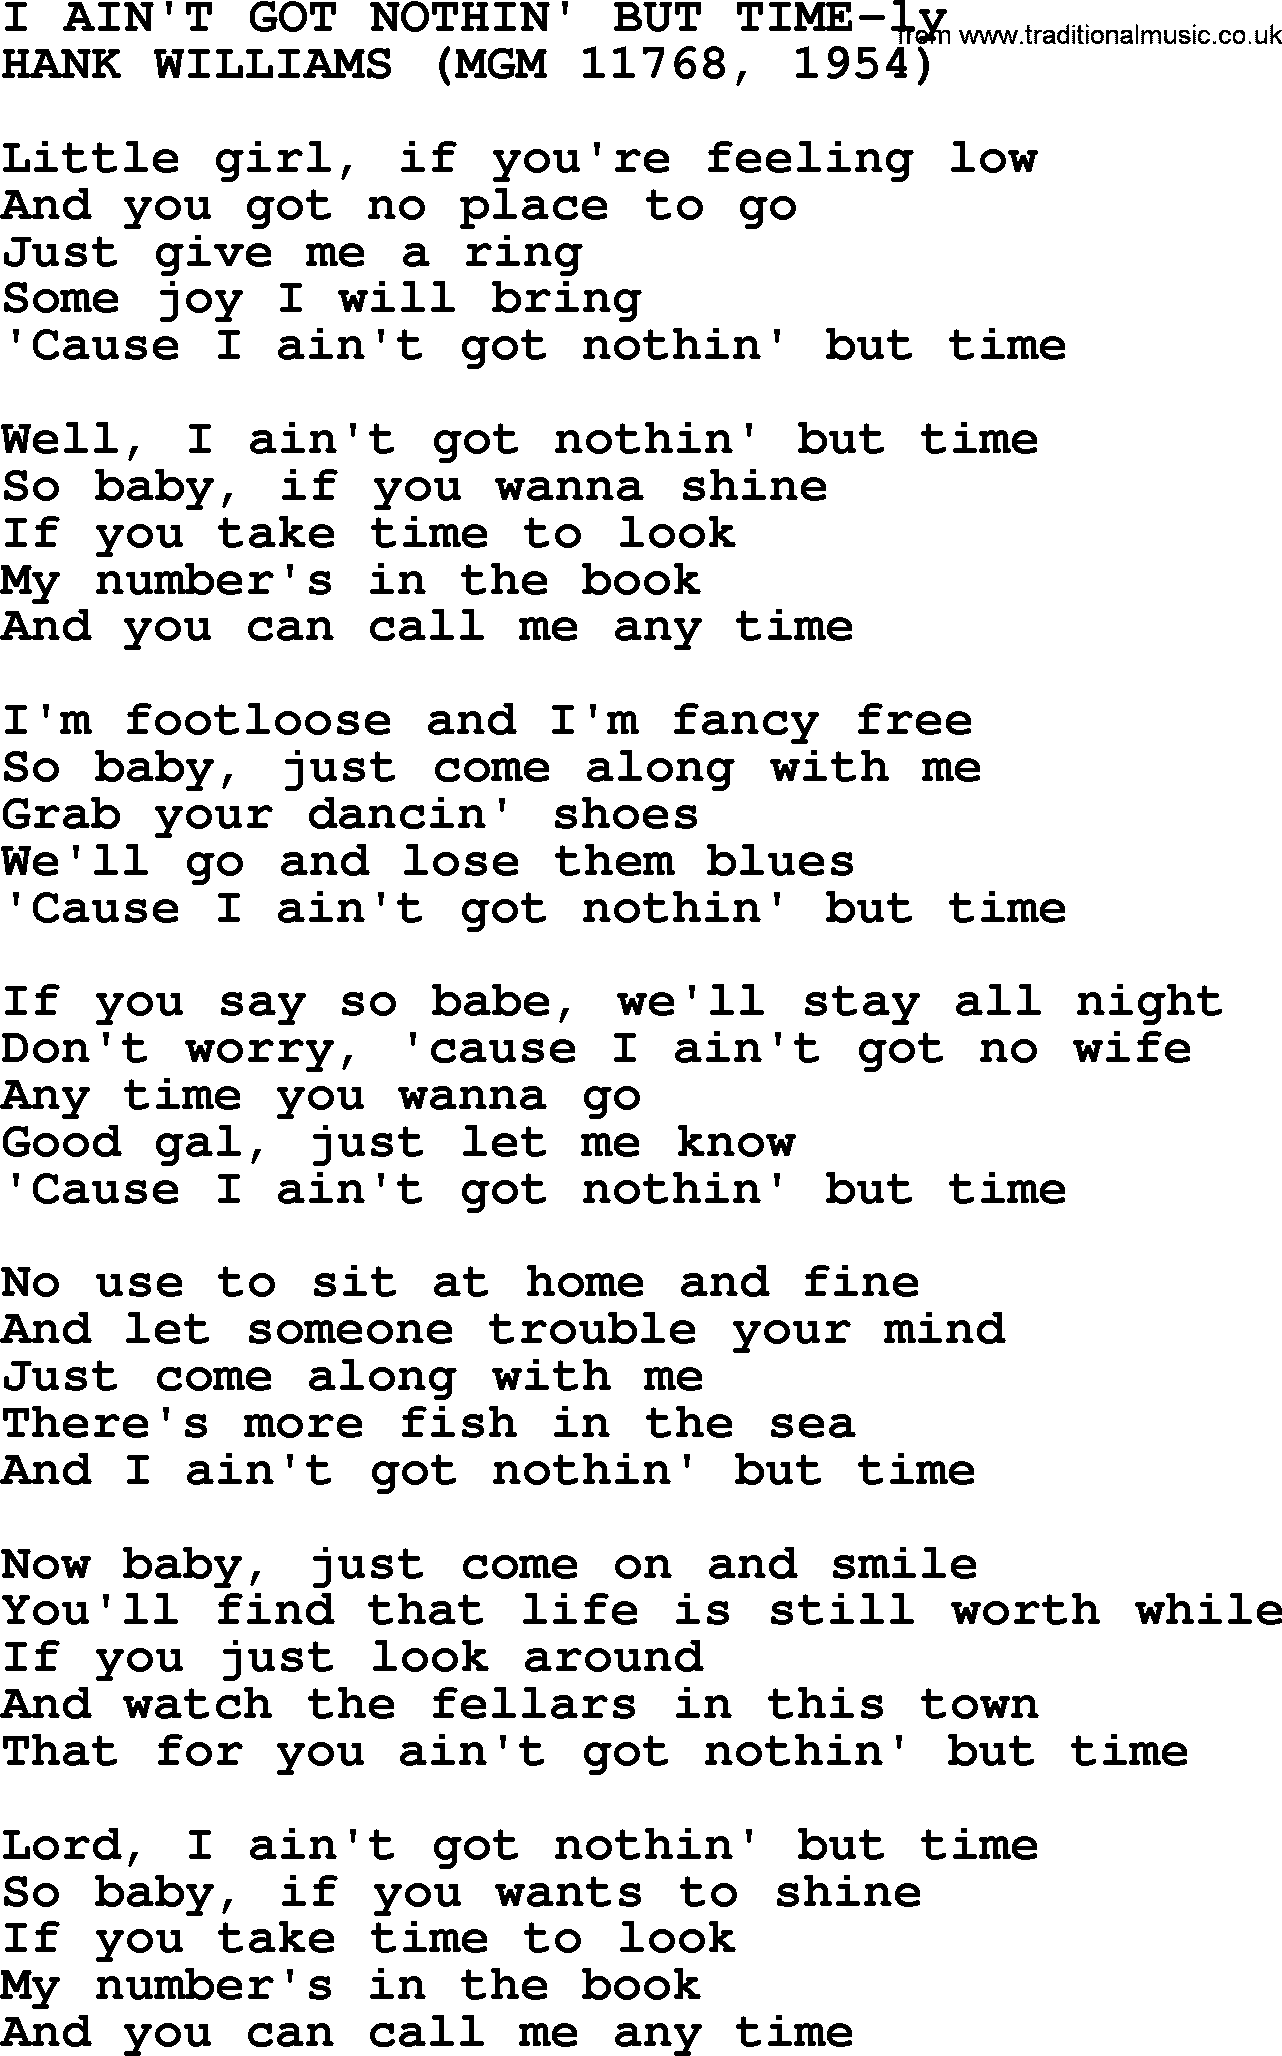 Hank Williams song I Ain't Got Nothin' But Time, lyrics